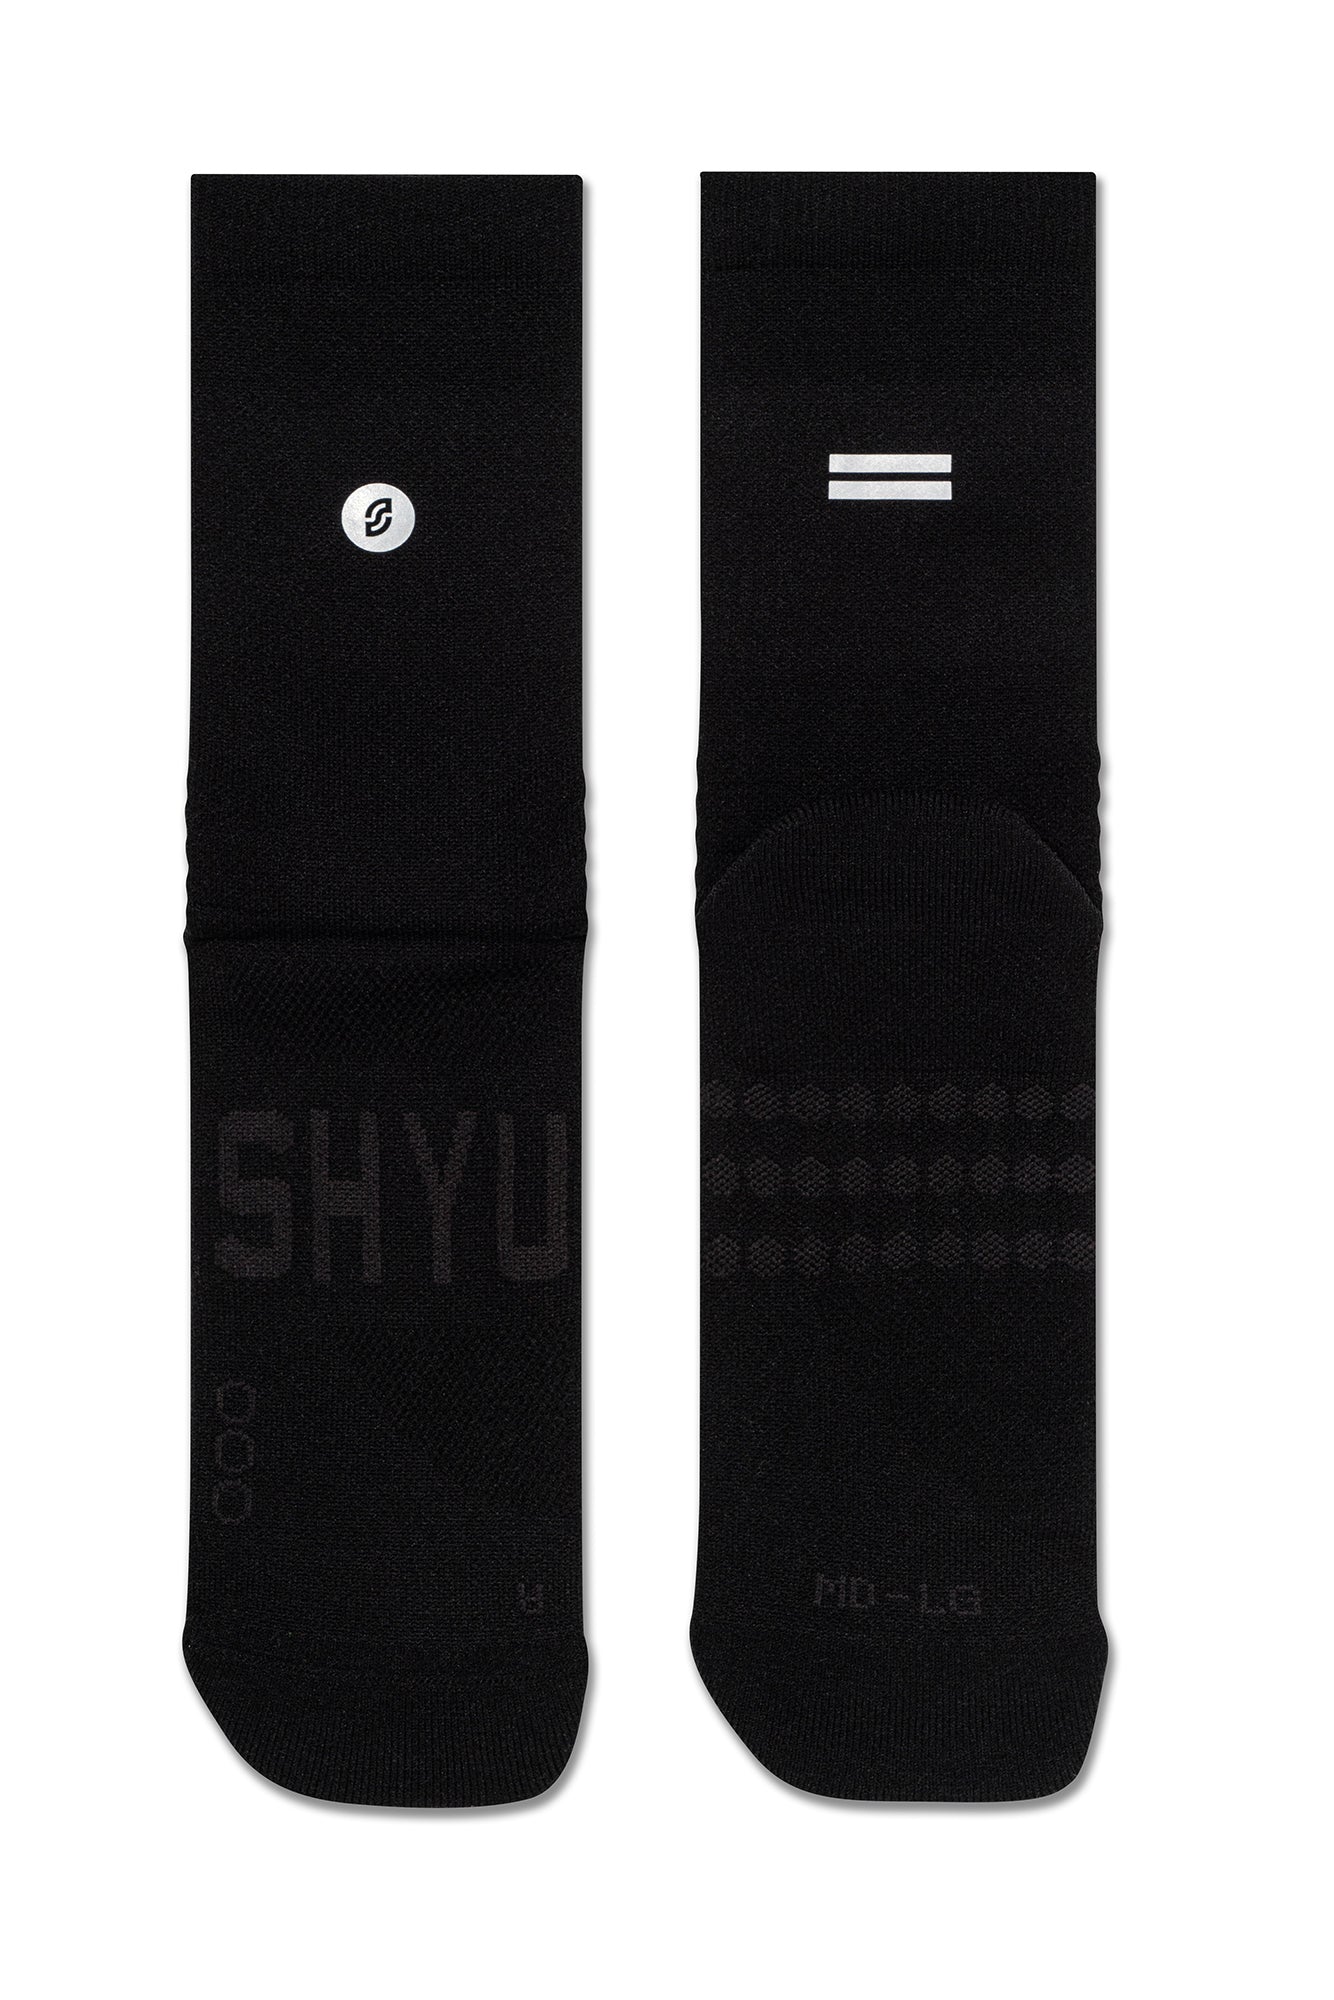 SHYU racing socks - black | black | black